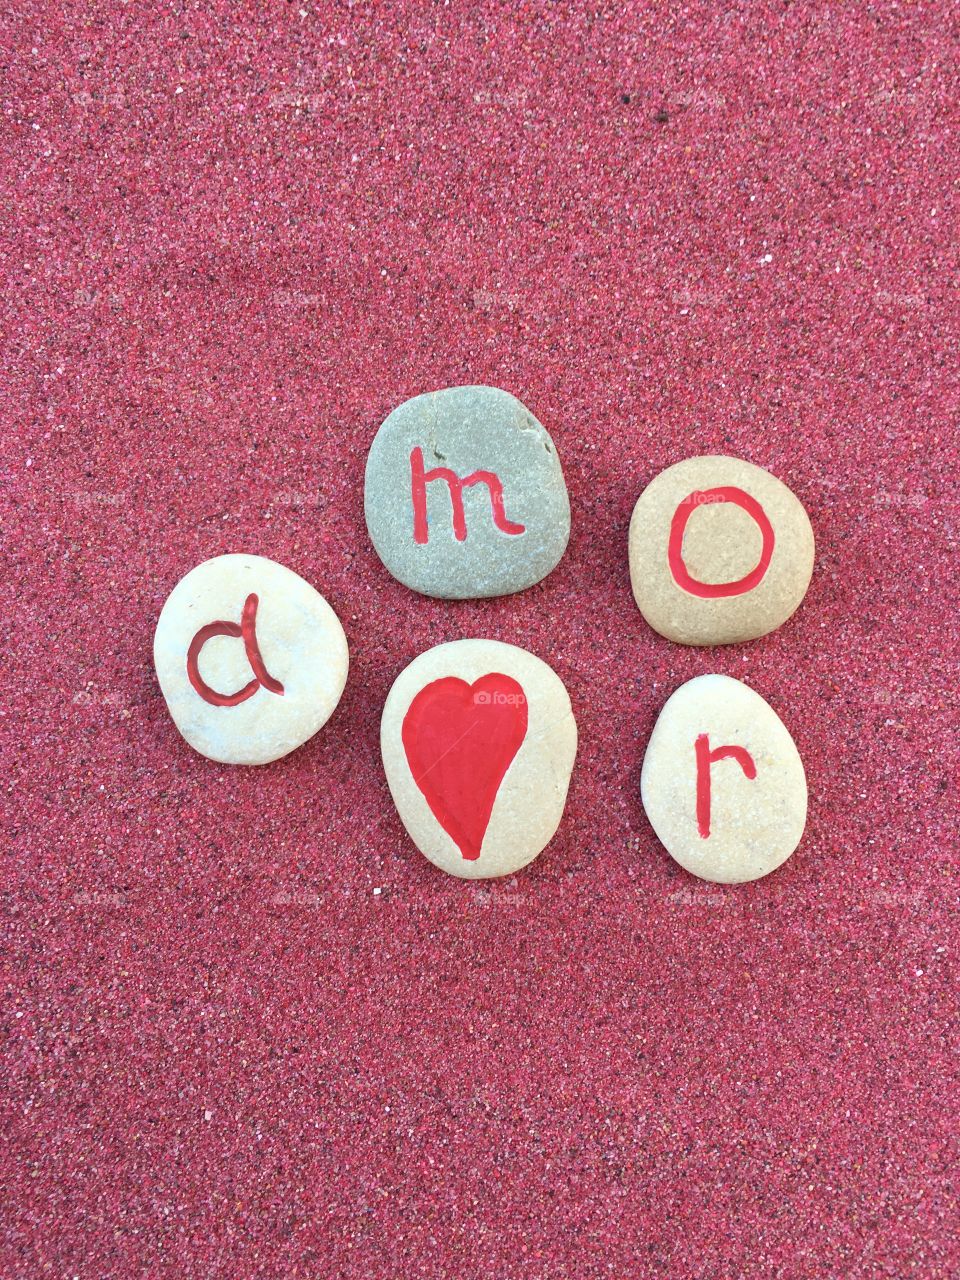 Amor message on stones